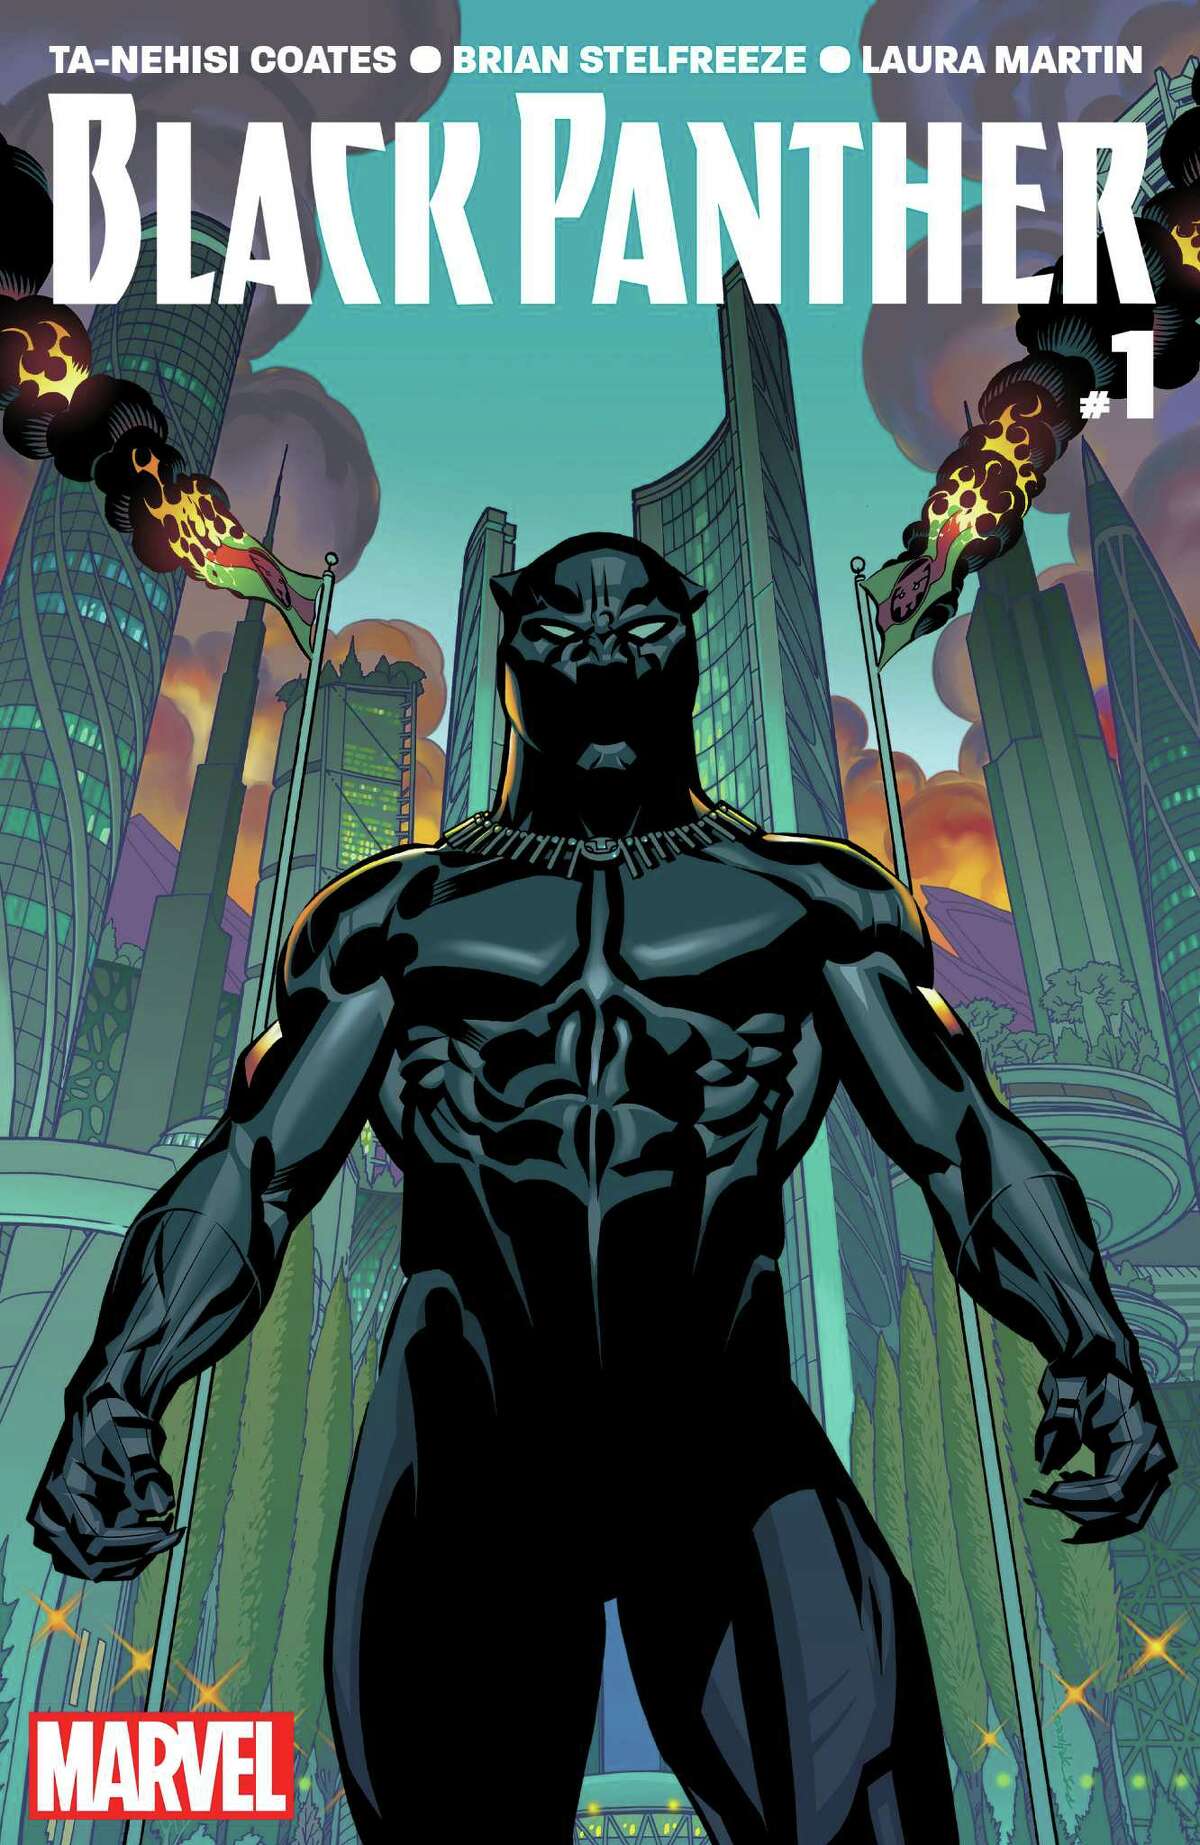 Ryan Miller -Autographed Marvel Black Panther Jersey